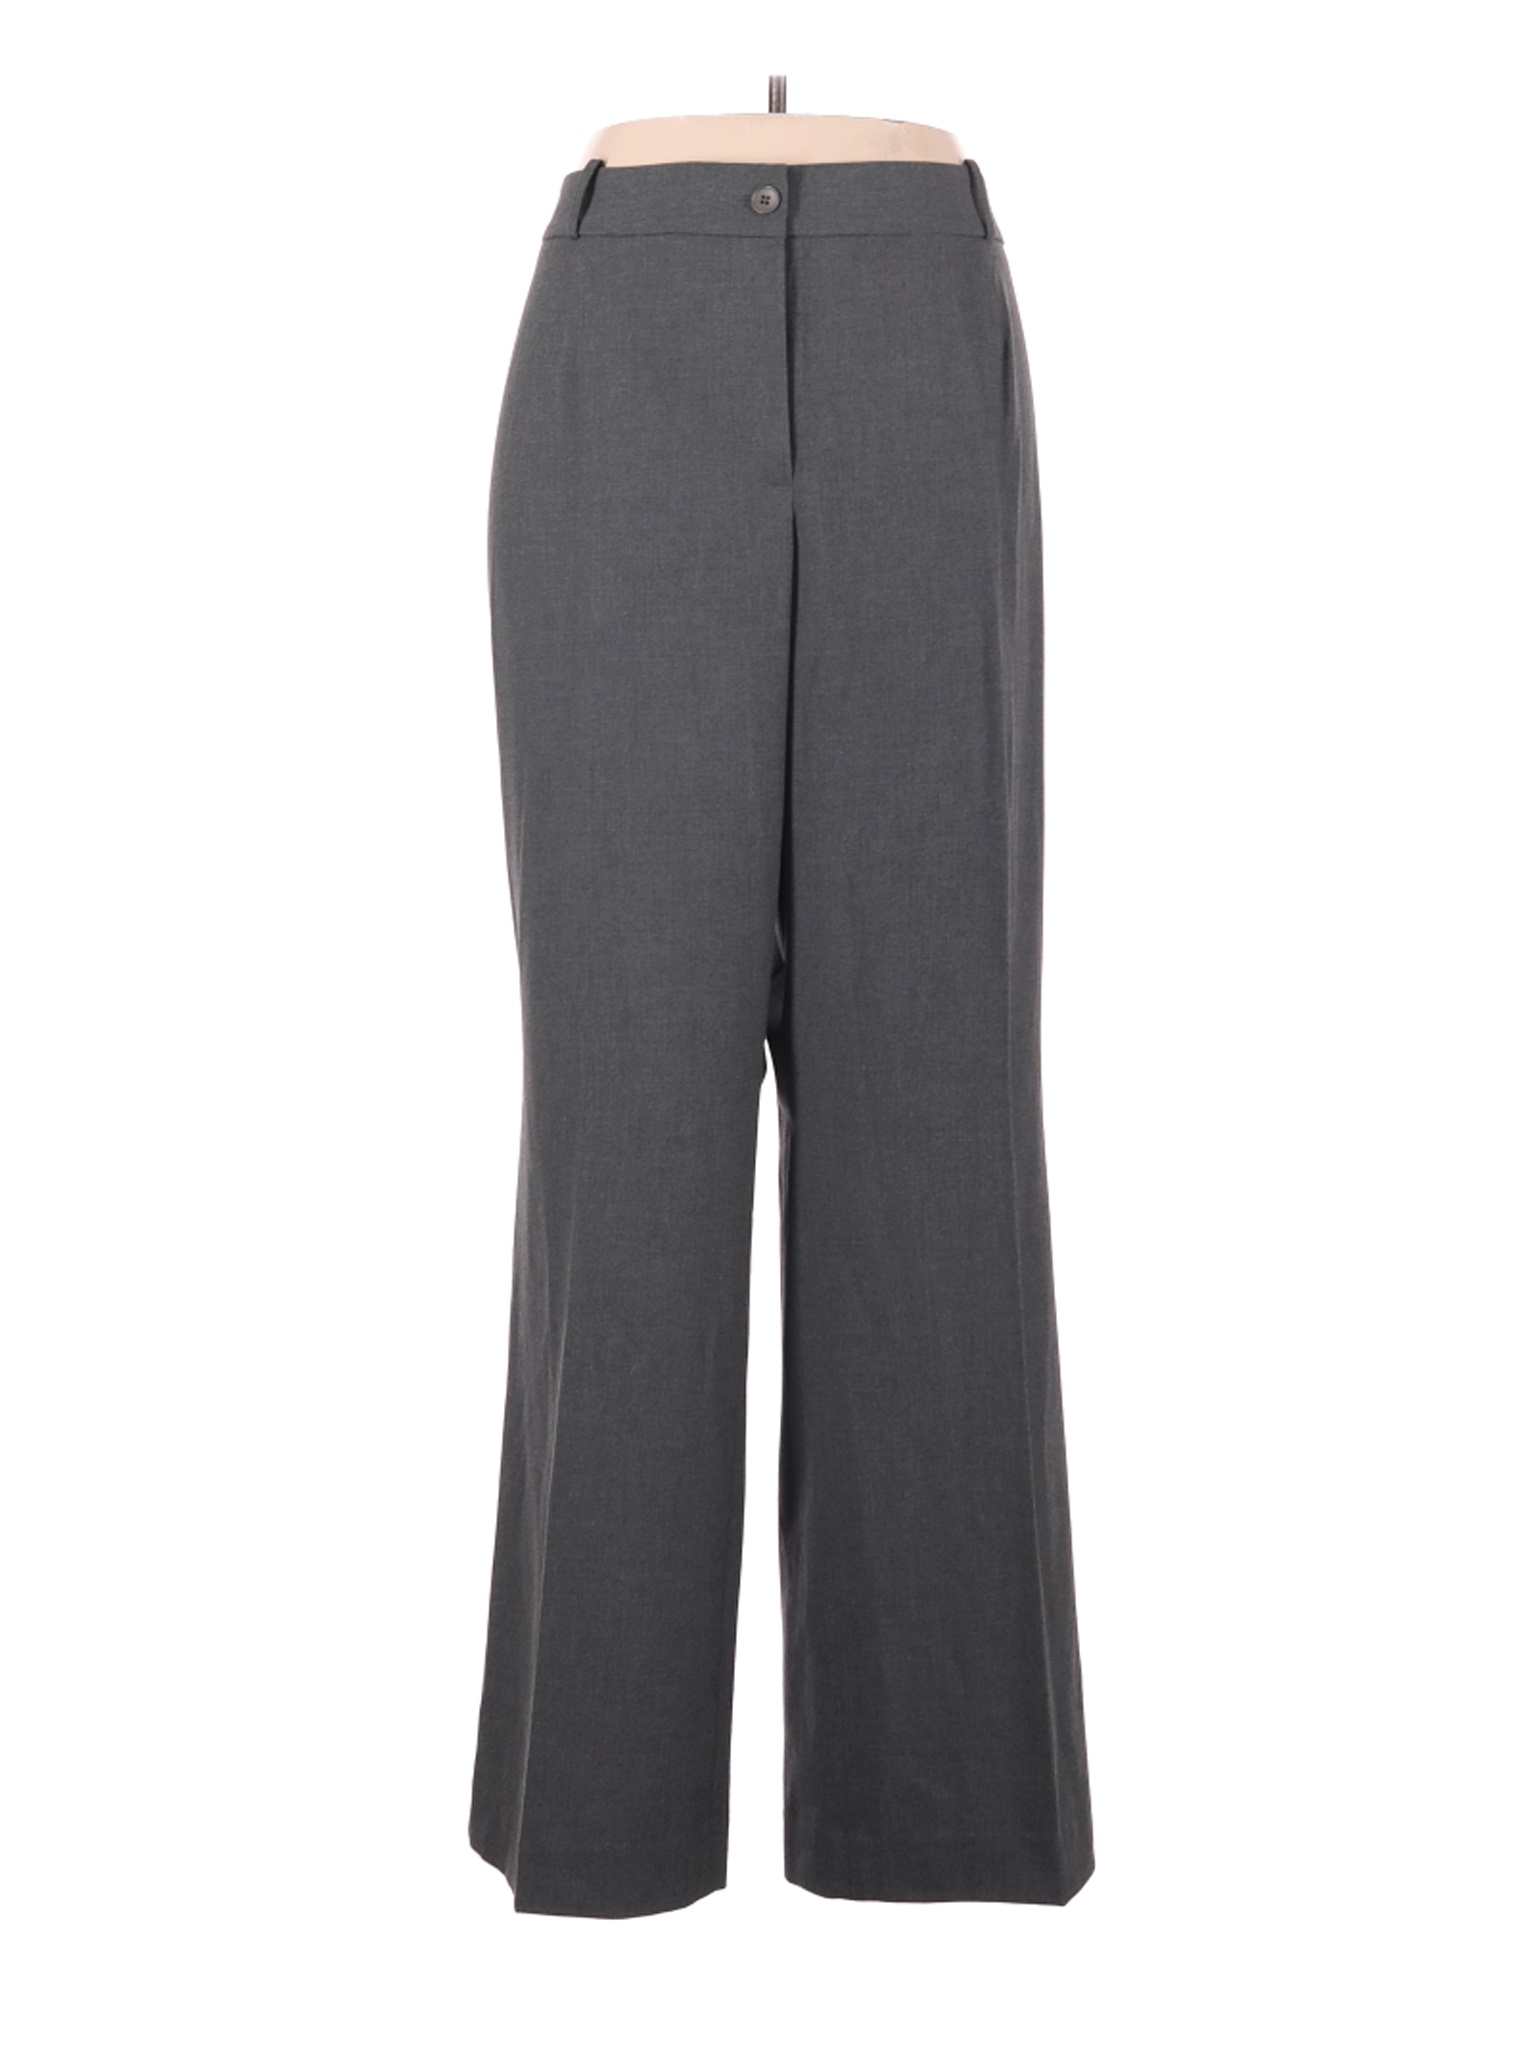 NWT Talbots Women Gray Dress Pants 20 Plus | eBay